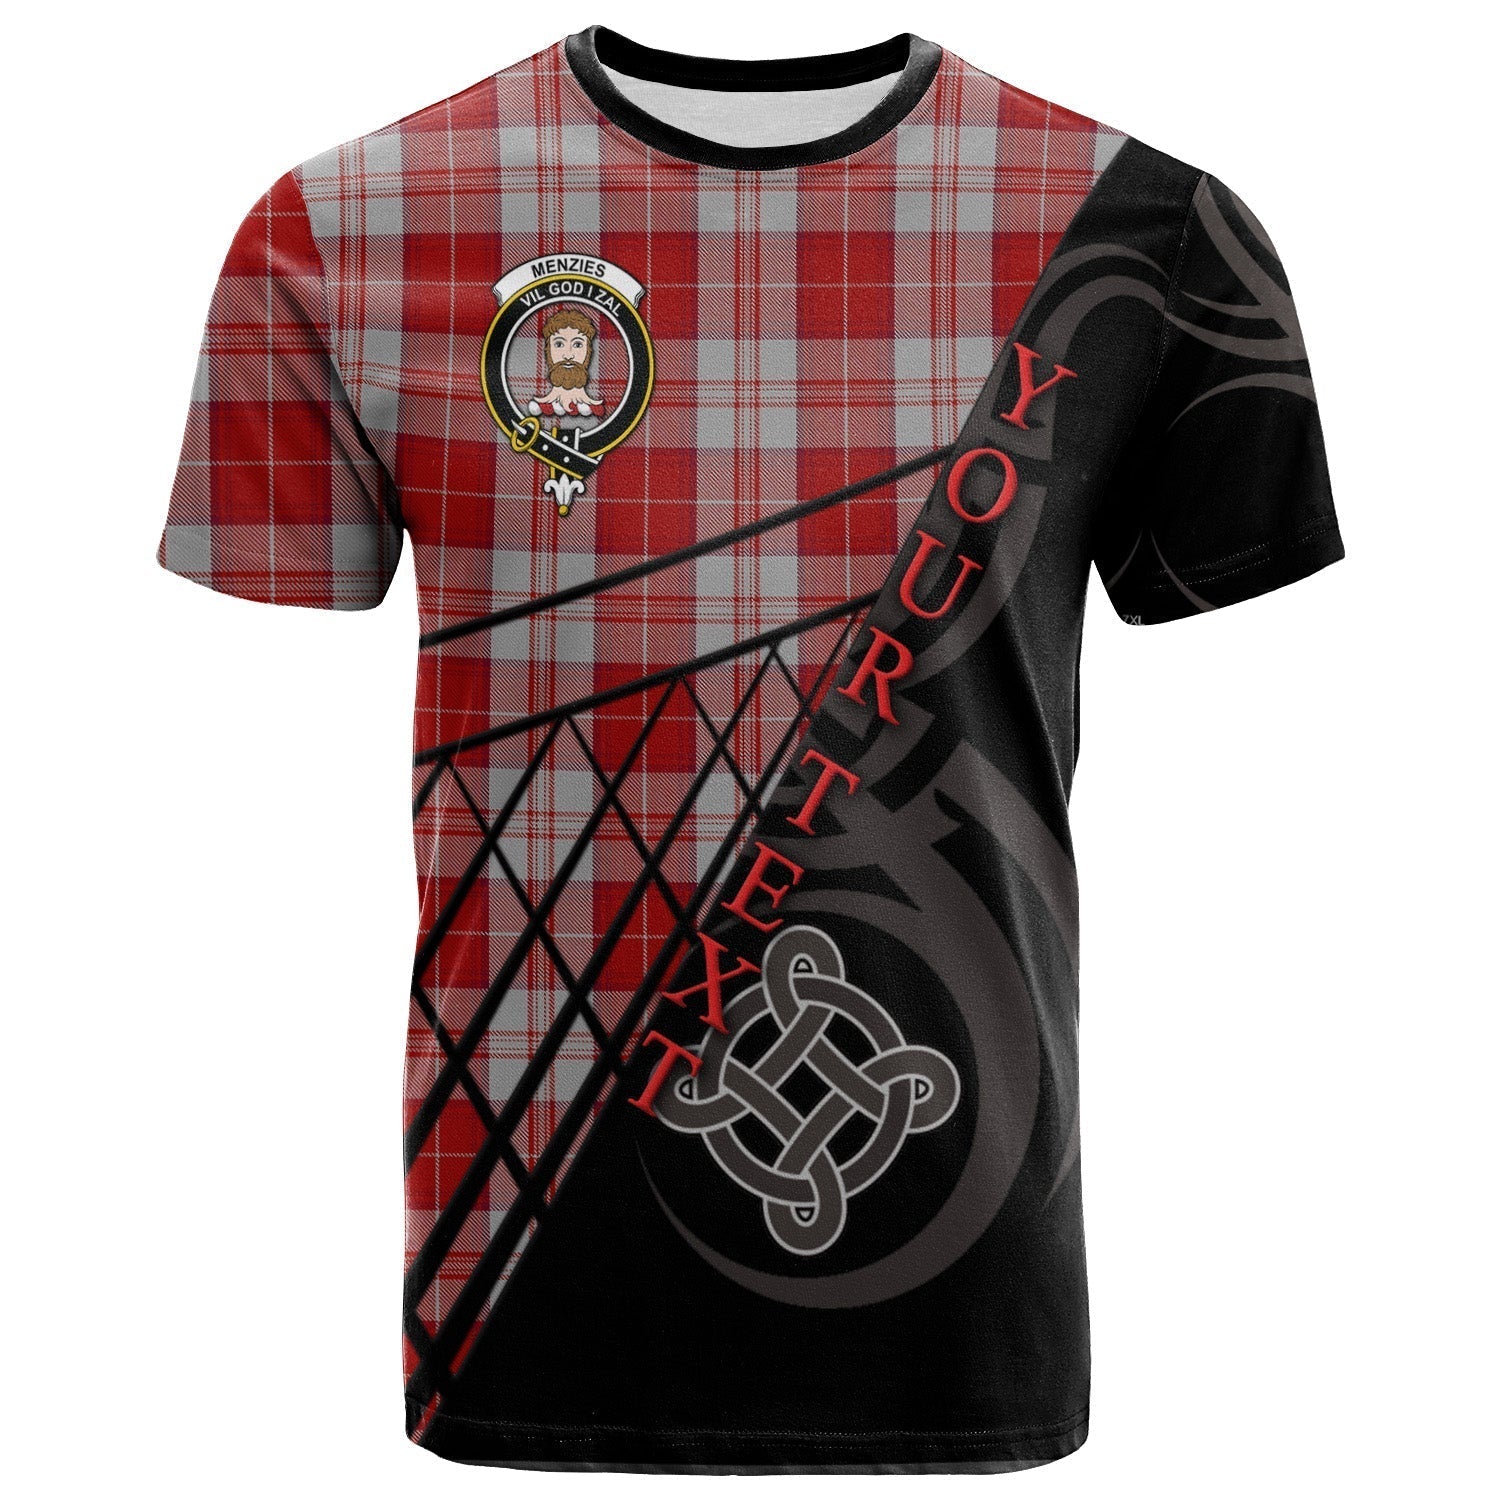 scottish-menzies-04-clan-crest-tartan-pattern-celtic-t-shirt